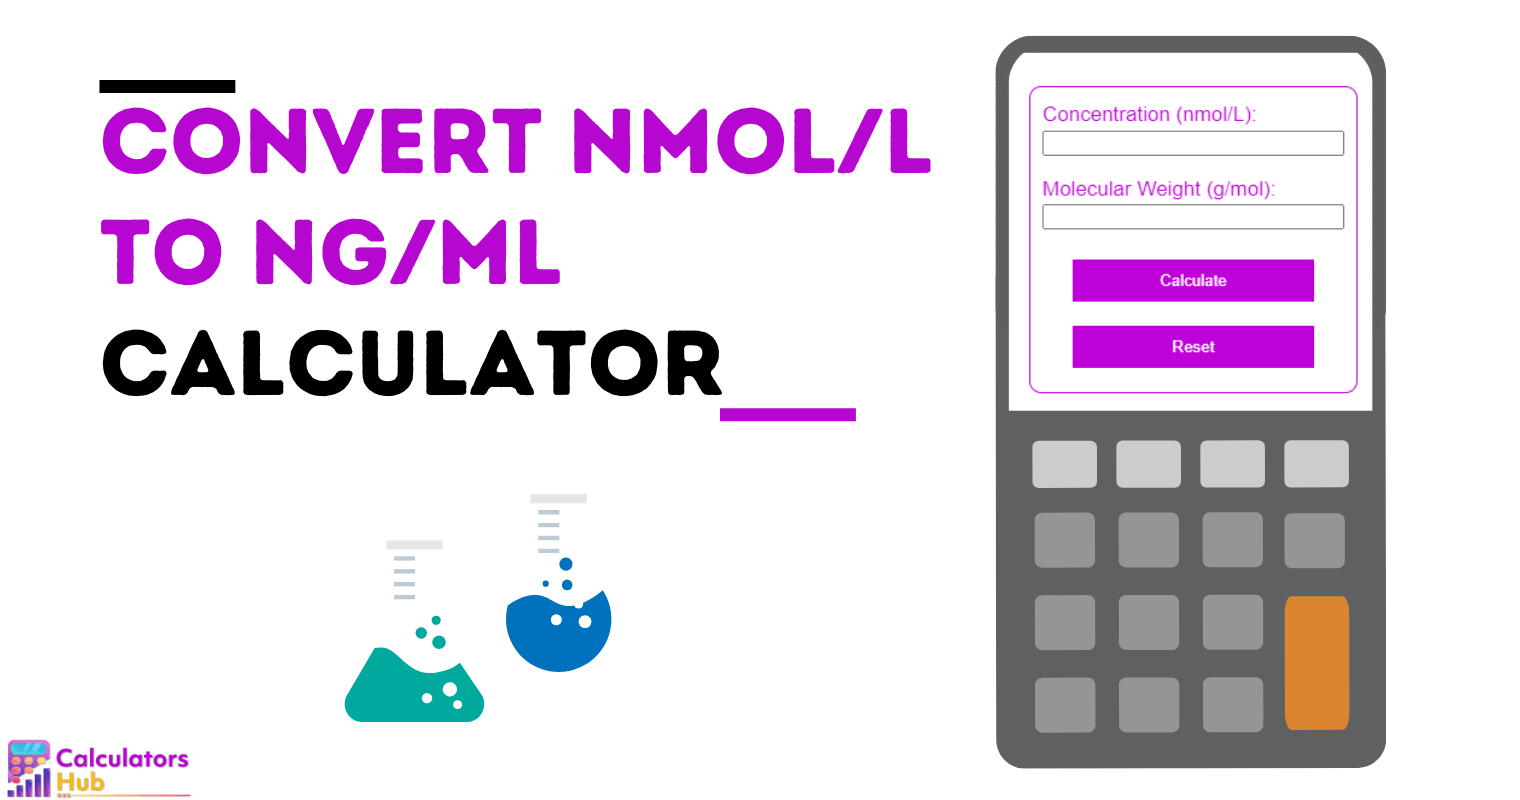 Convert nmol/l to ng/ml Calculator